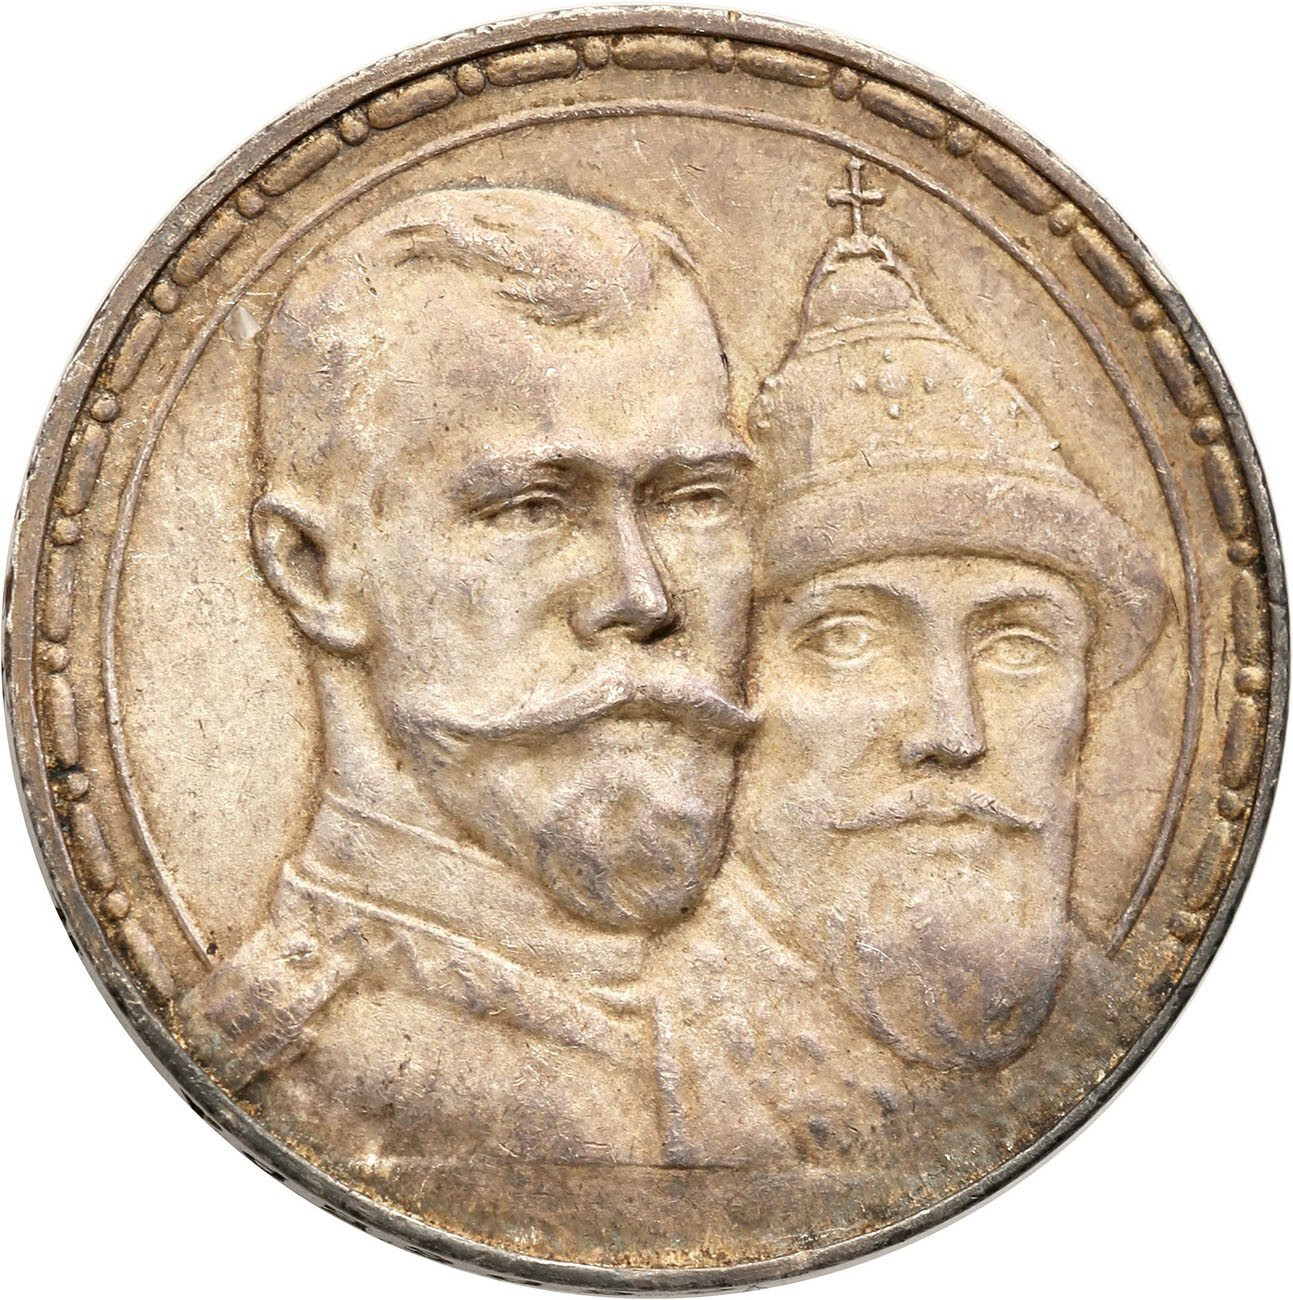 Rosja. Mikołaj II. Rubel 1913, Petersburg - 300-lecie Dynastii Romanowów, stempel głęboki